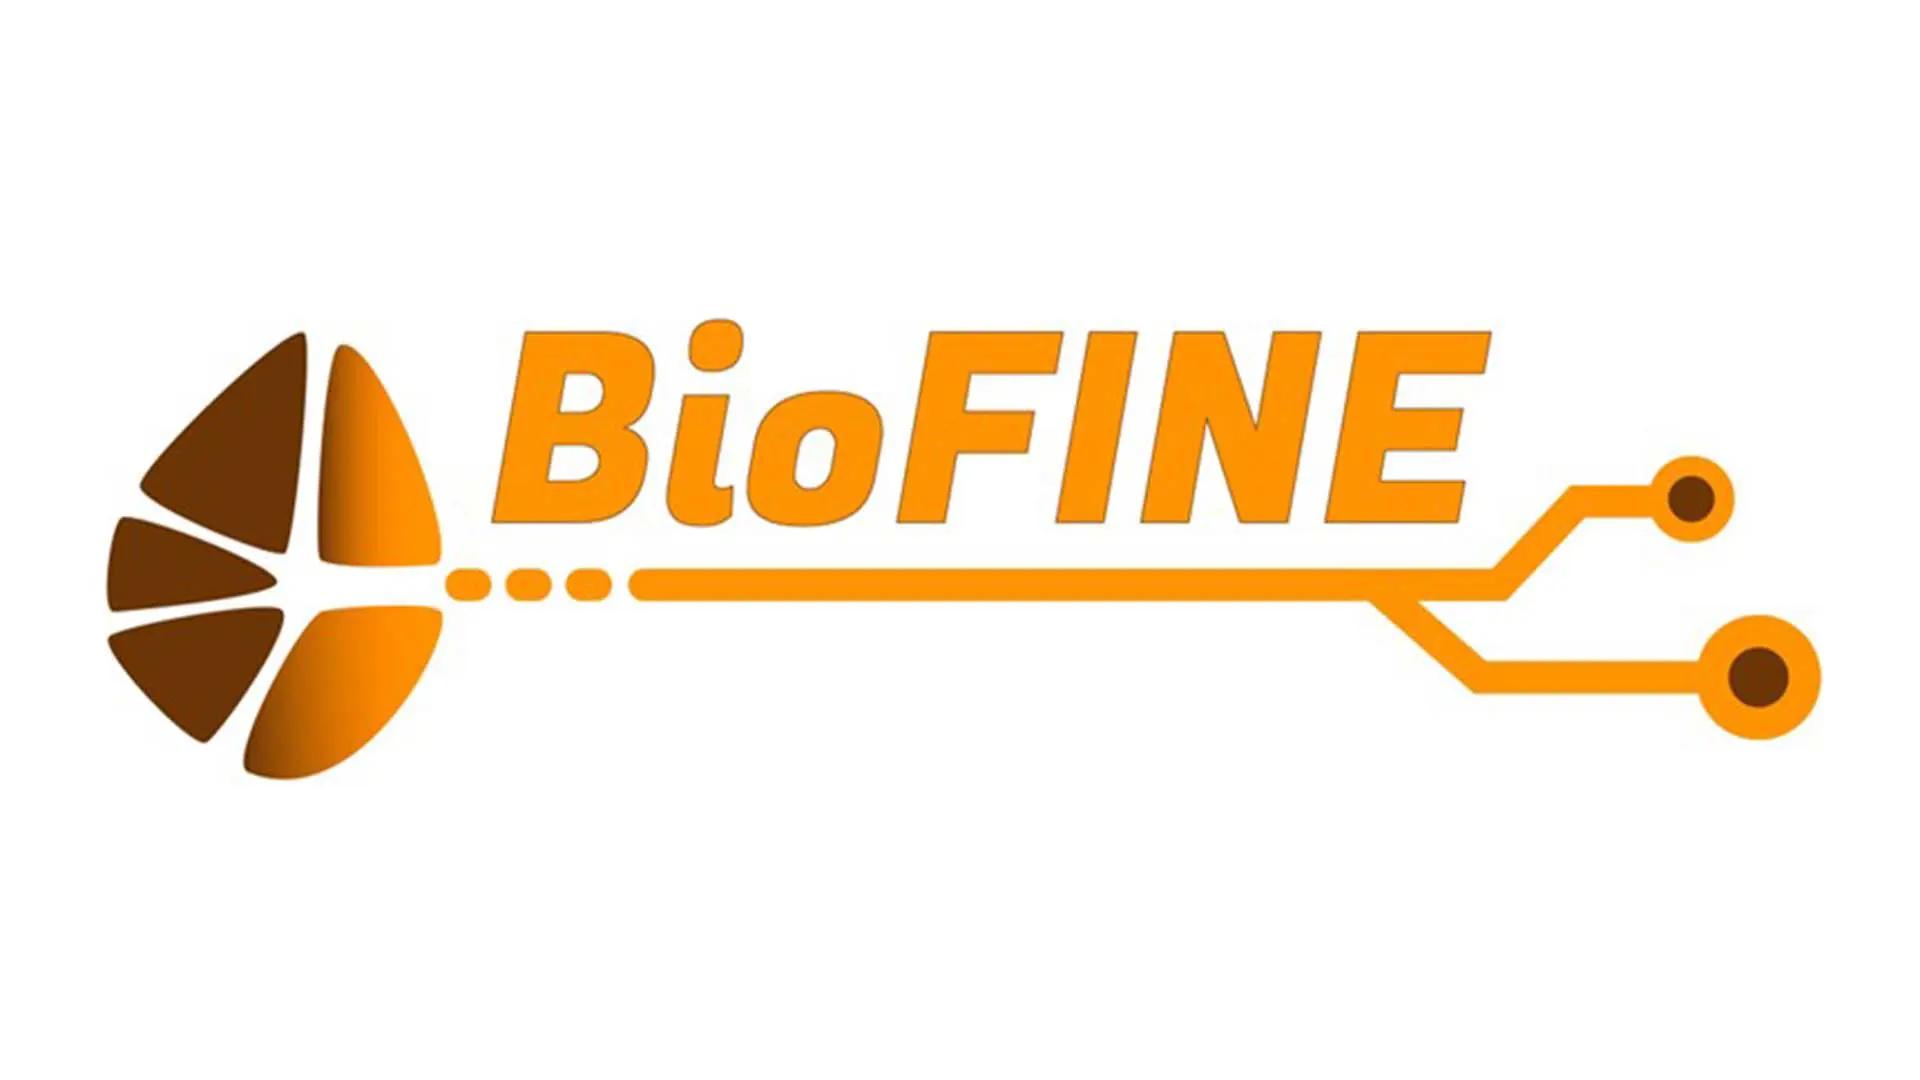 BioFINE 